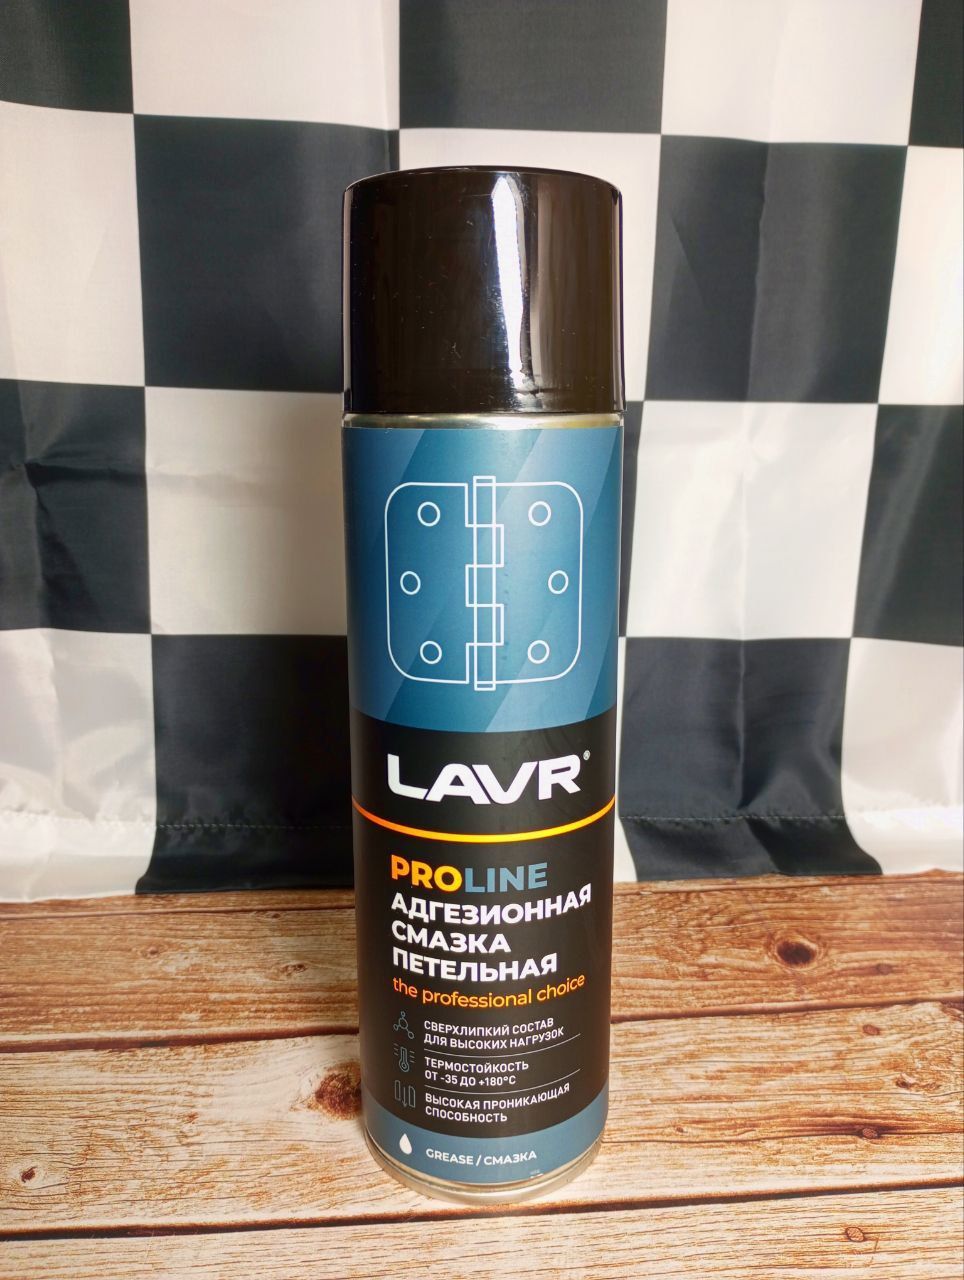 LAVR Pro Line Adhesive Spray Адгезионная смазка аэрозольная 650 мл